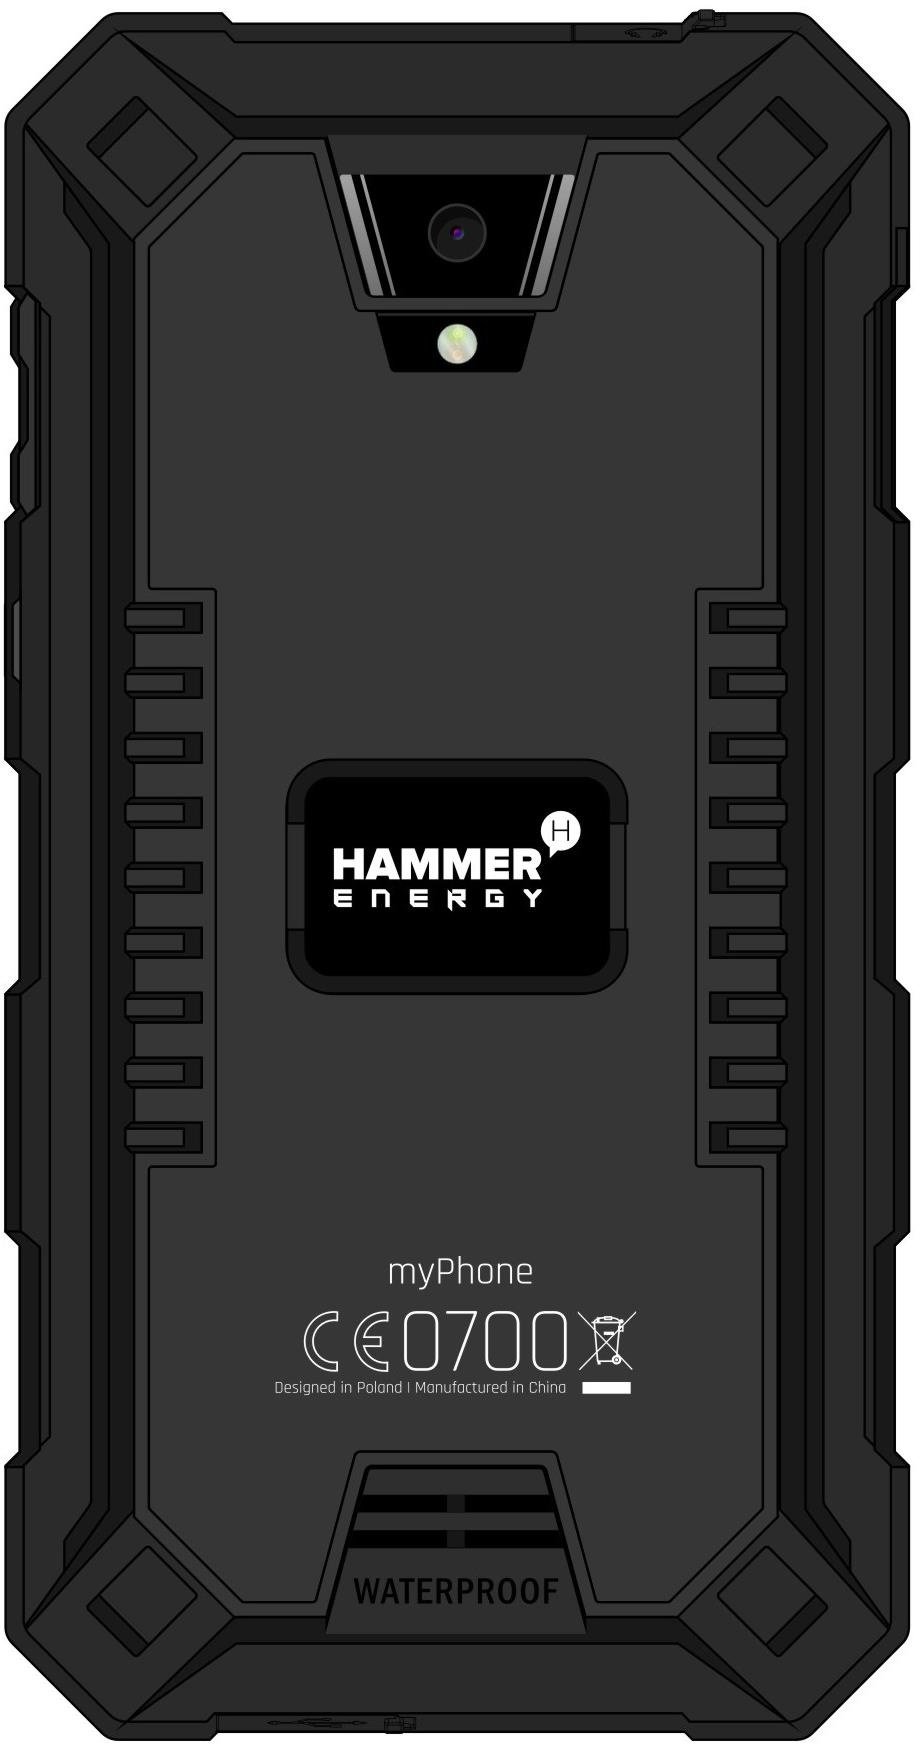 chytrý telefon myPhone Hammer Energy